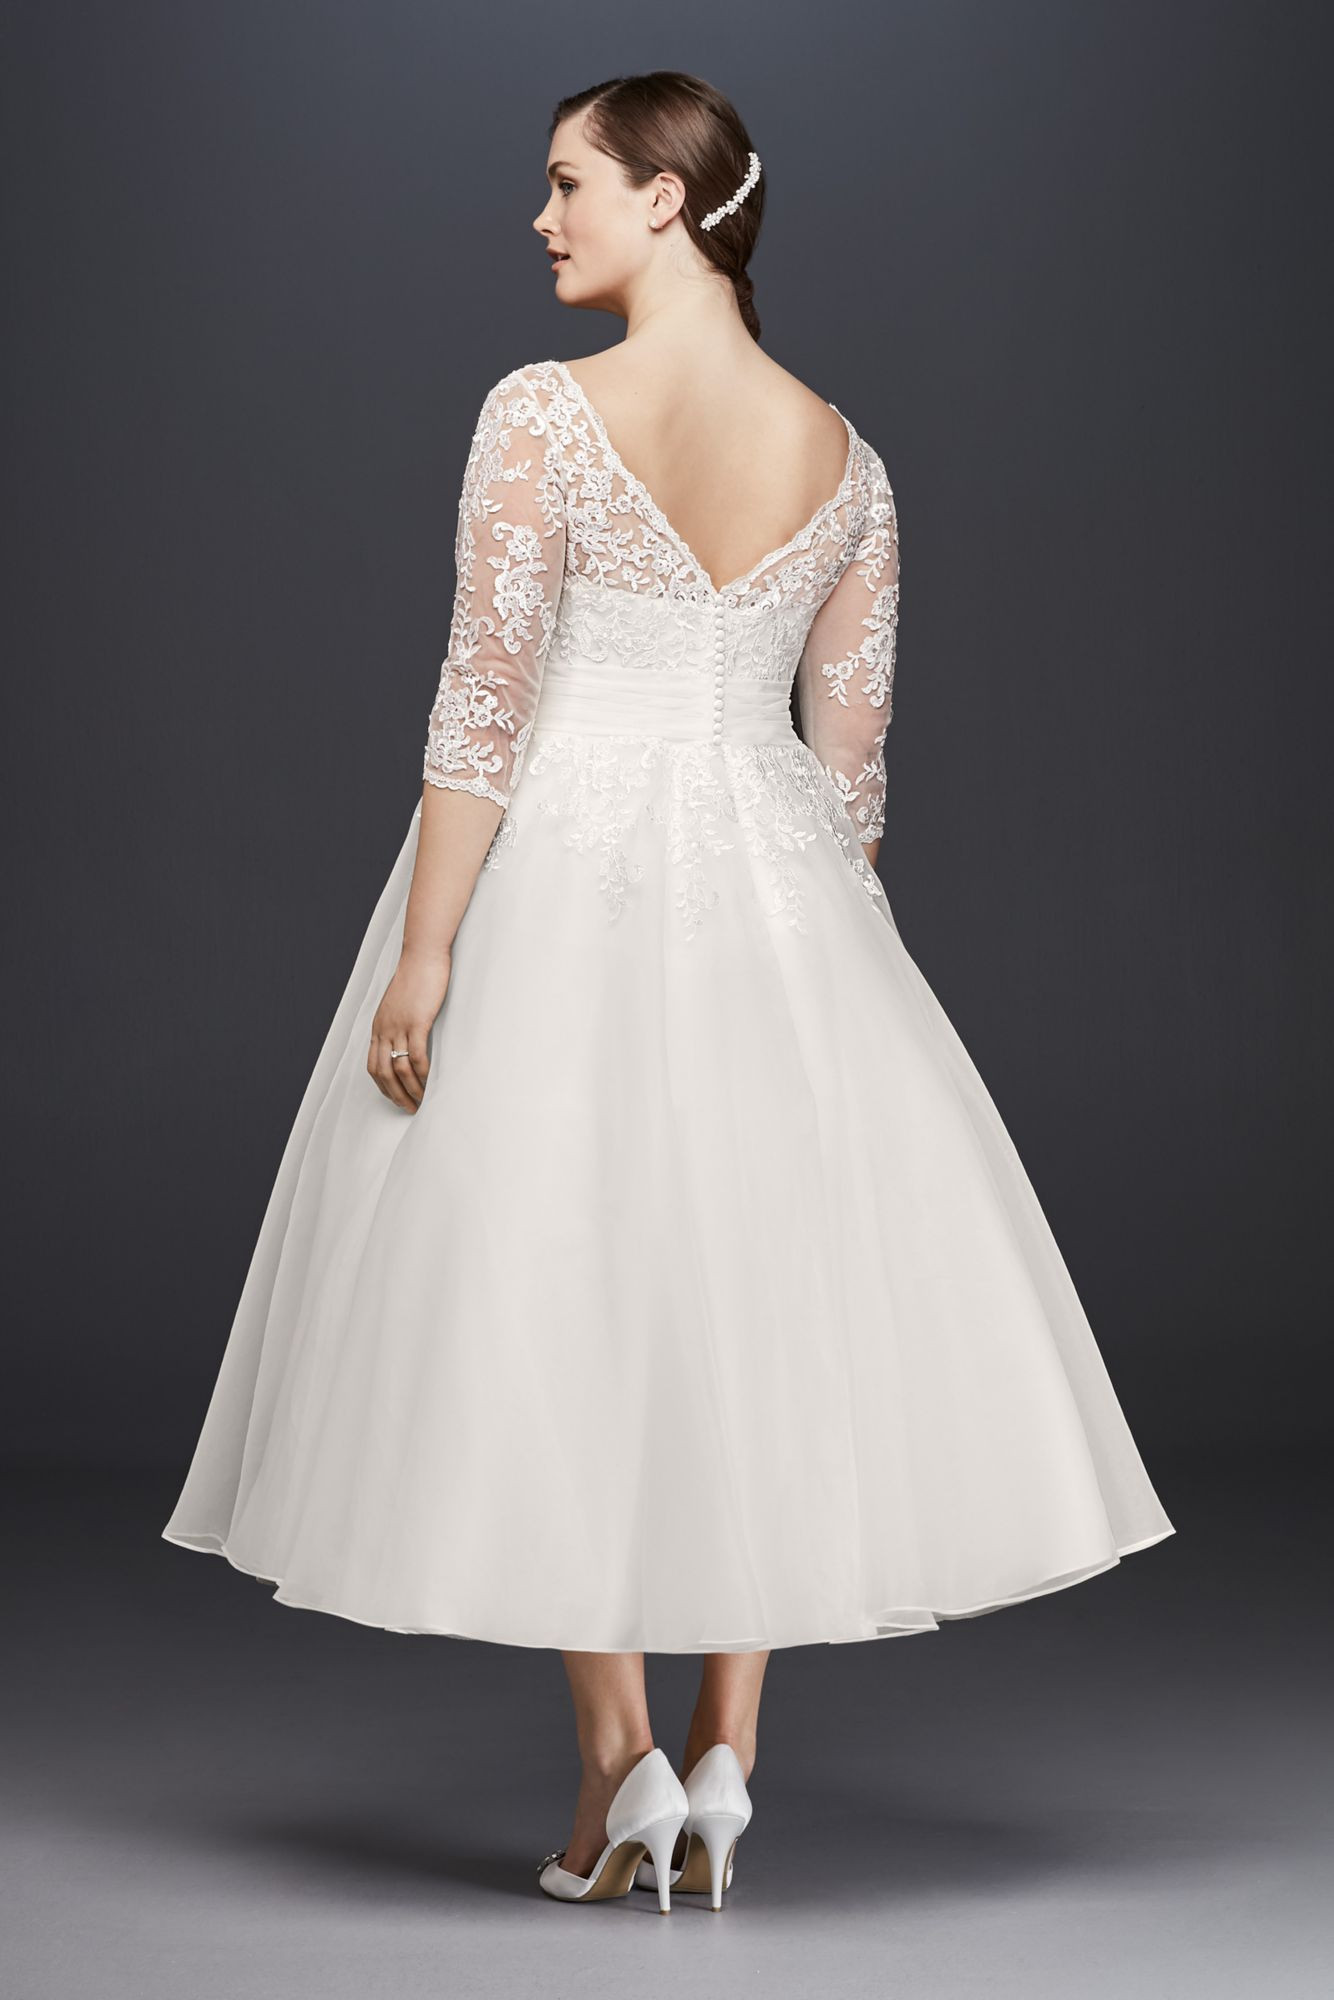 Plus Size Tea Length Wedding Dress
 Plus Size 3 4 Sleeves 9WG3857 Style Tea Length Lace